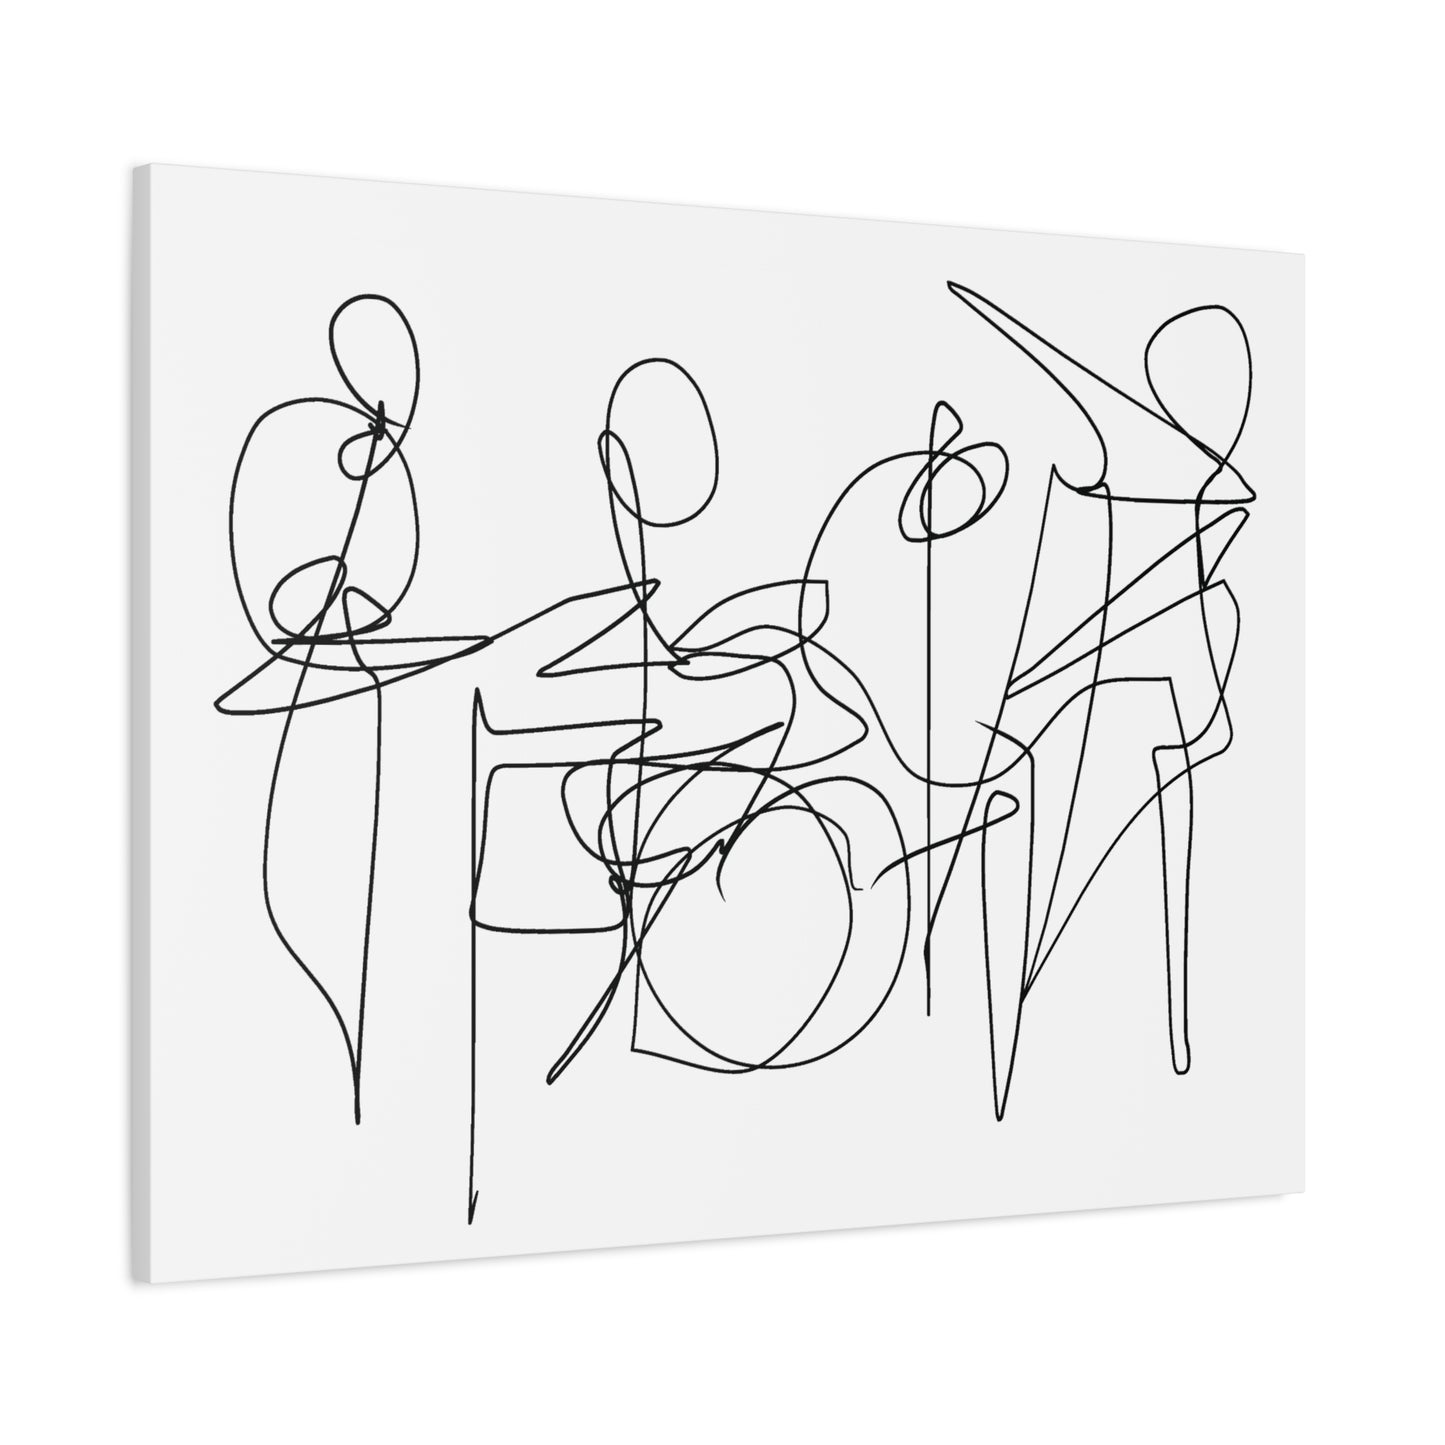 The Big Band Matte Canvas Print 1.25"